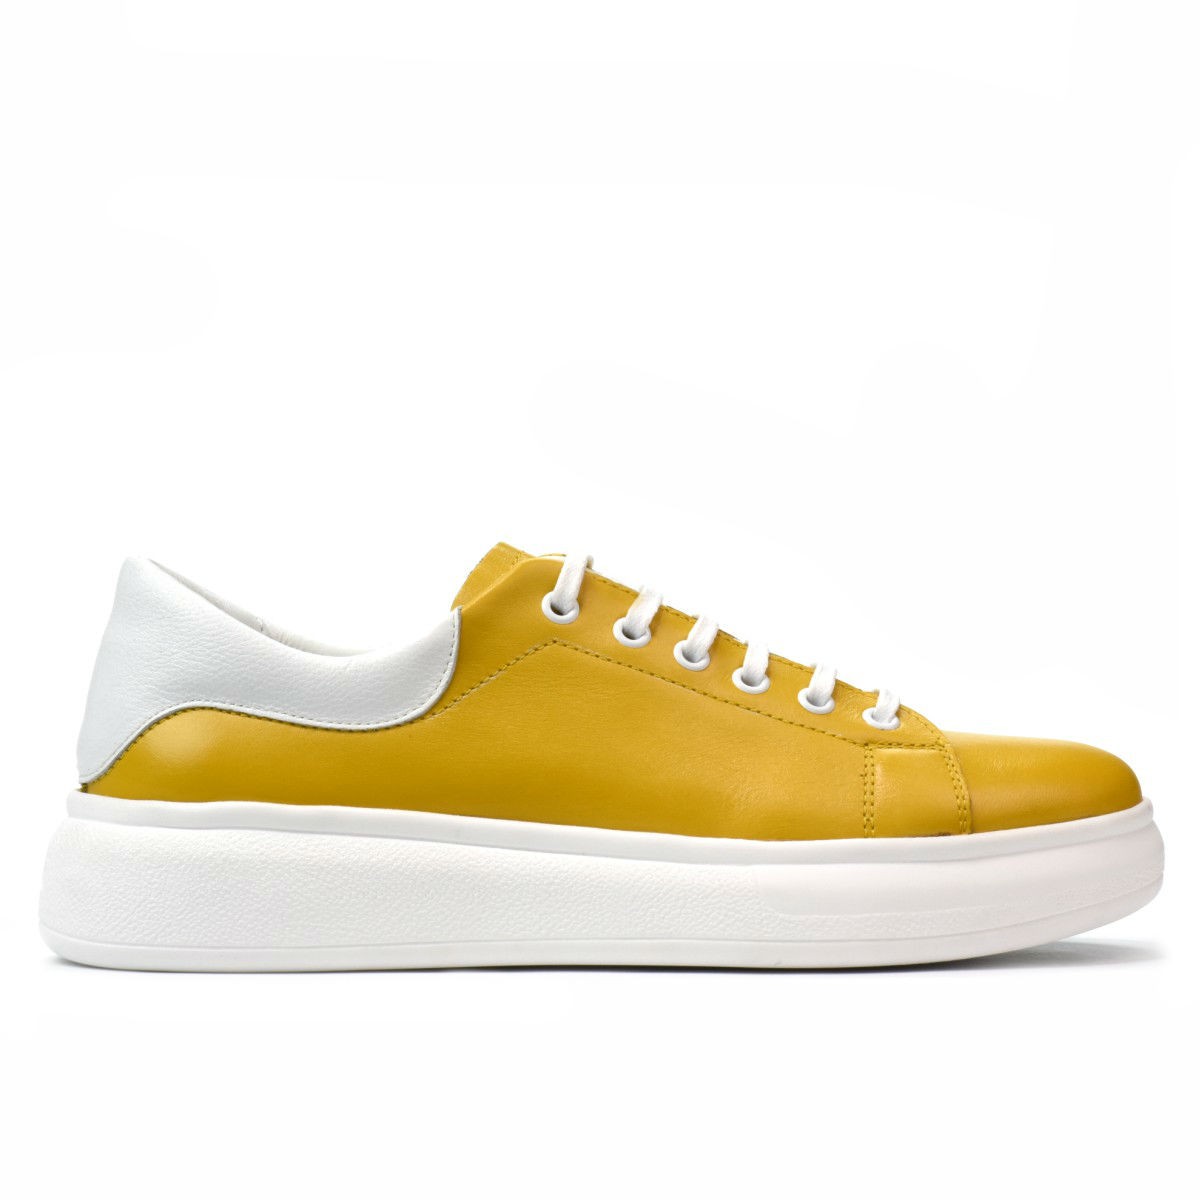 Women sport shoes yellow combined 180 lei - Marelbo